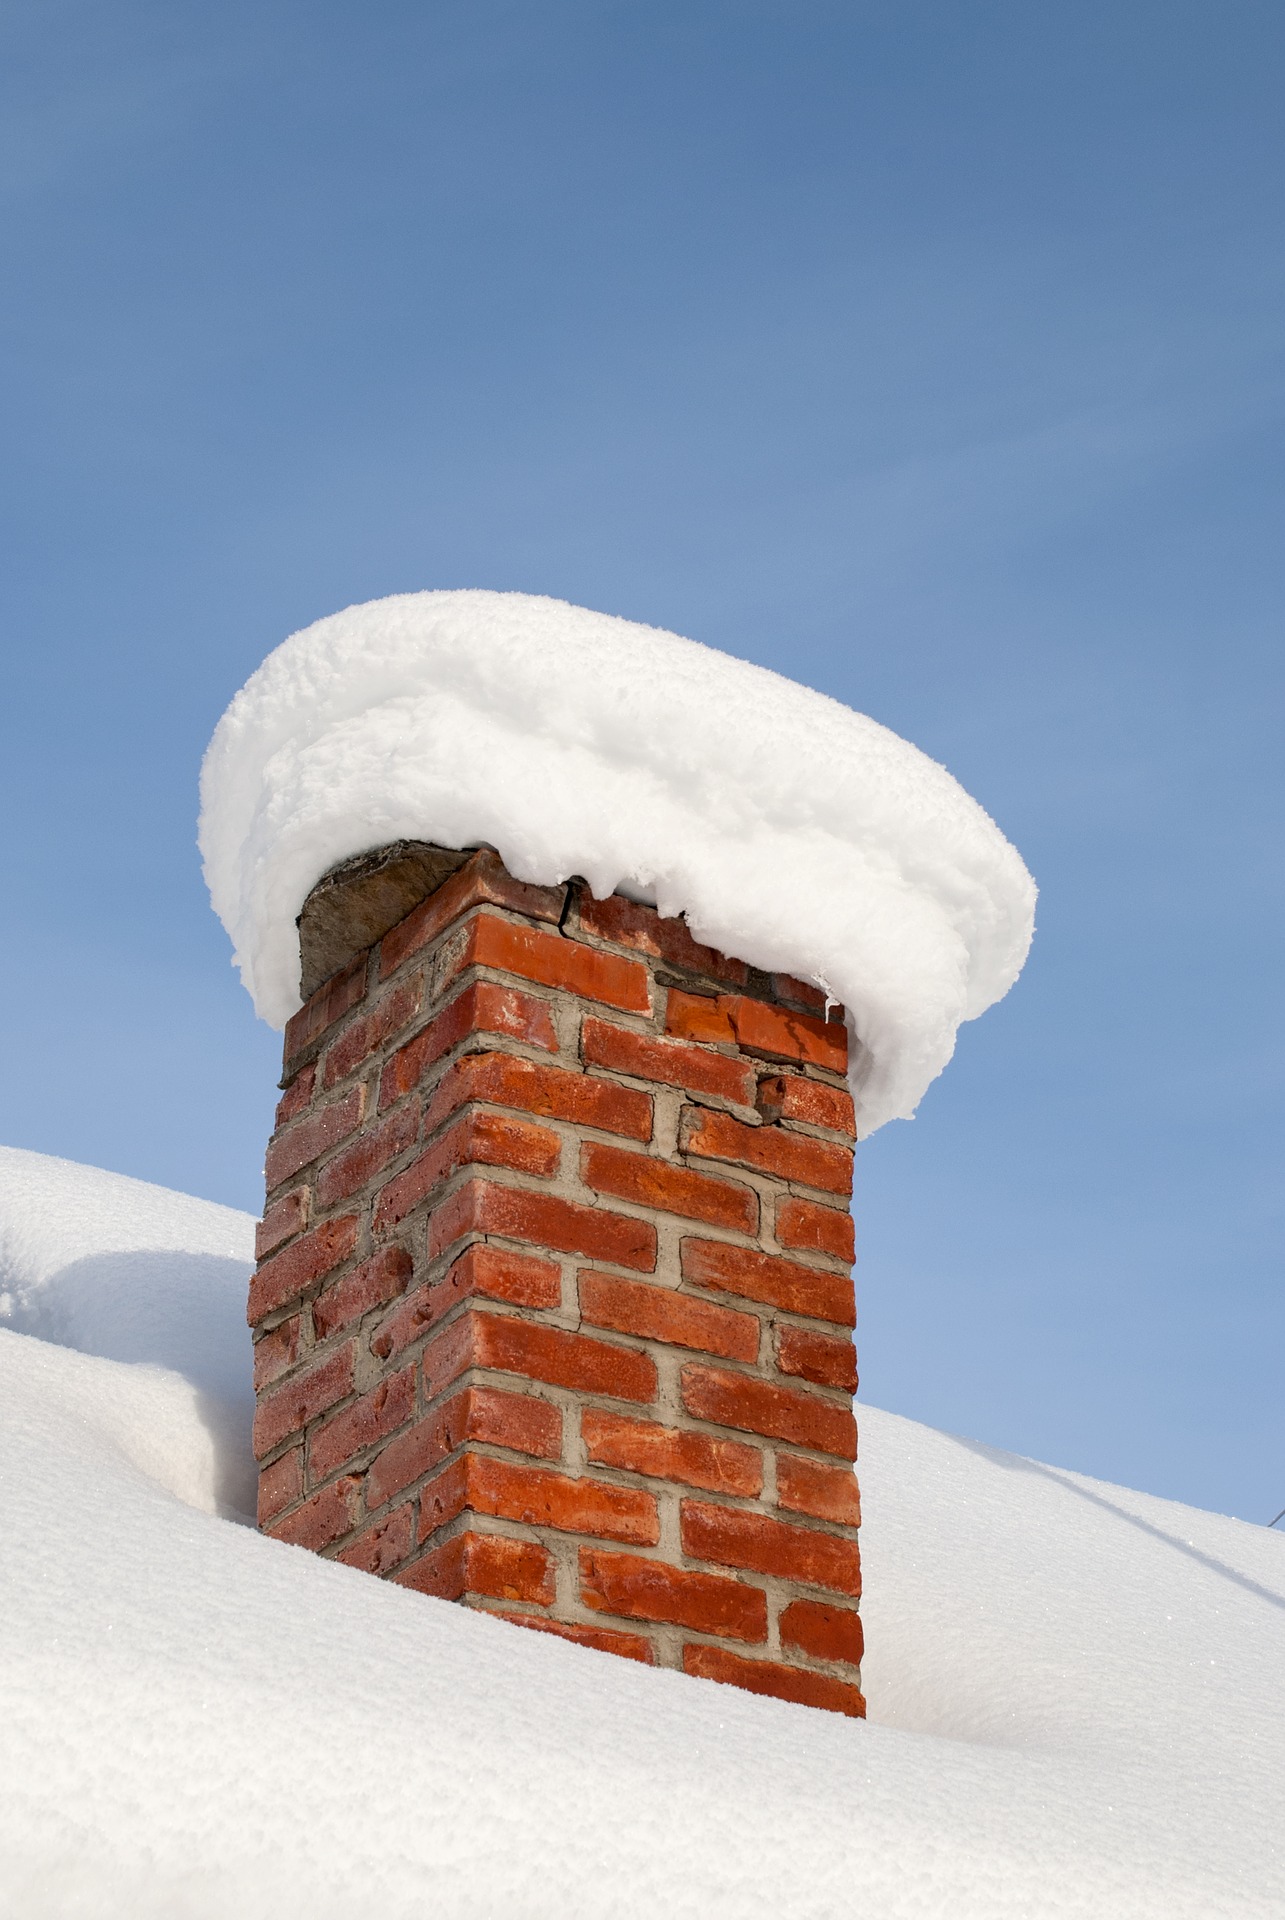 https://pixabay.com/photos/winter-sky-snow-outside-chimney-3285527/